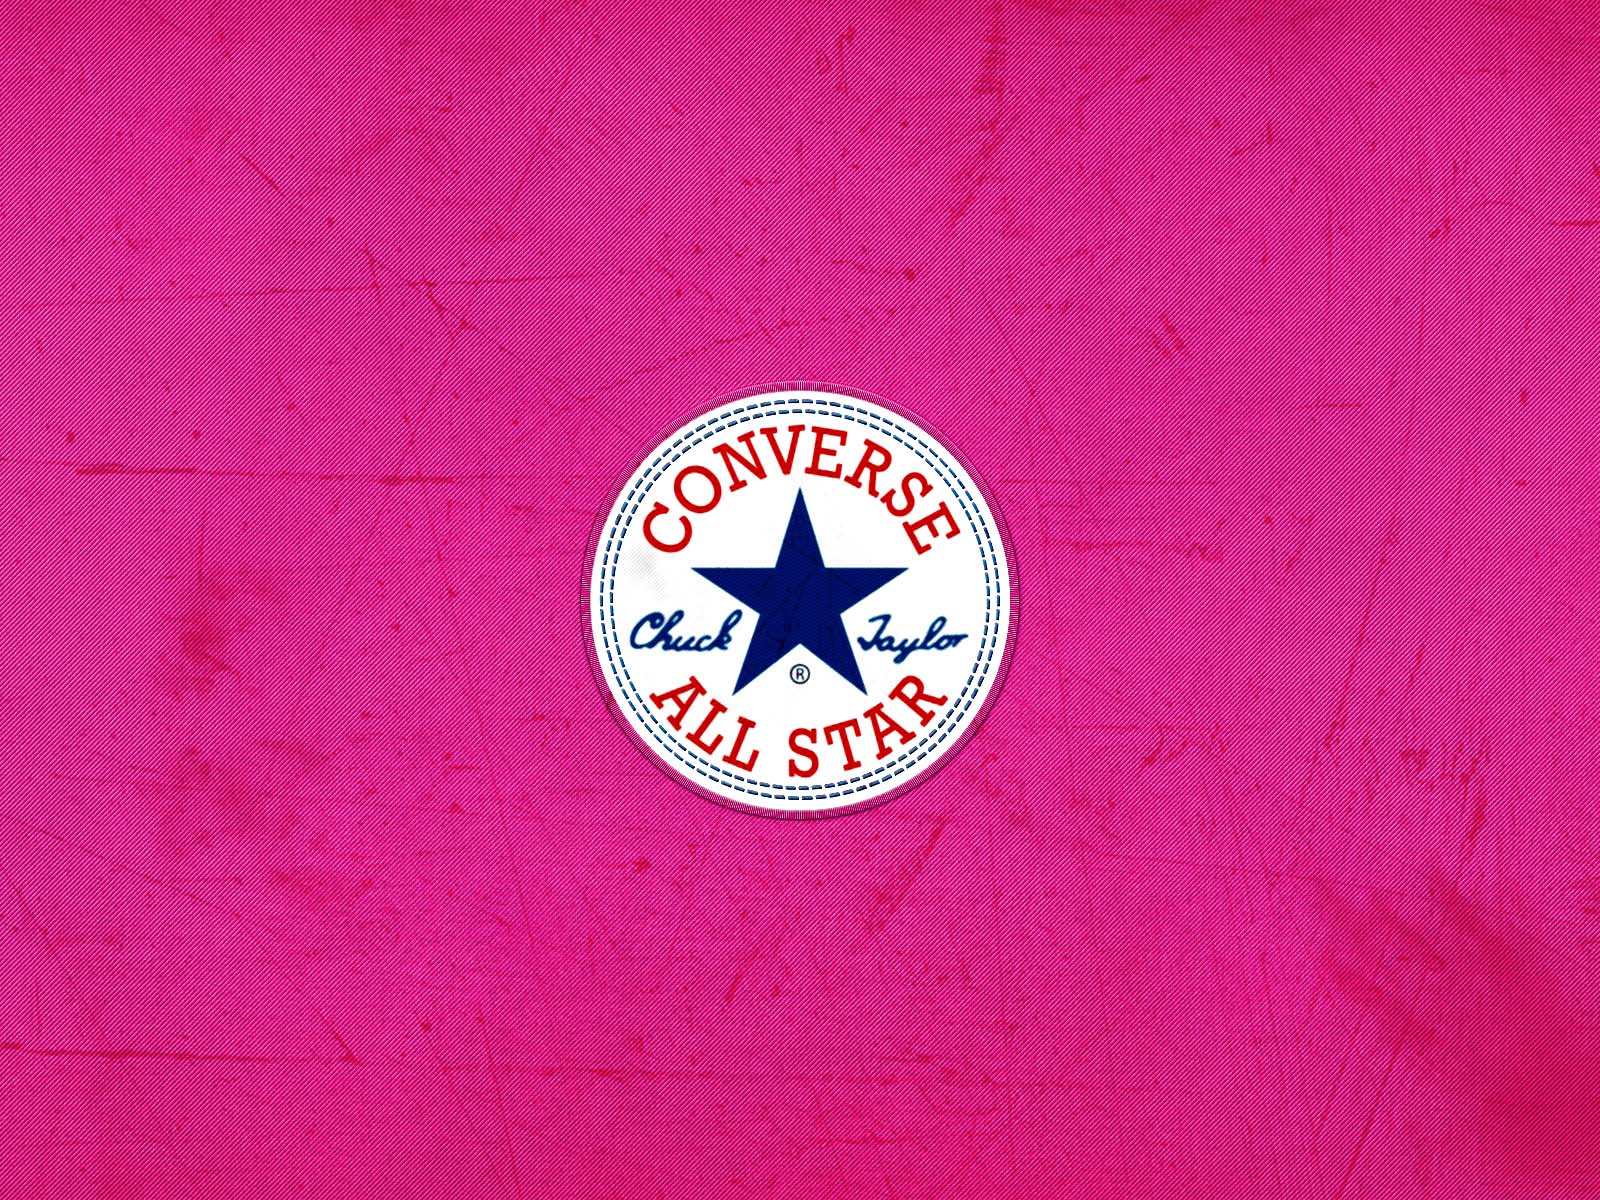 Converse All Star HD Logo Wallpaper